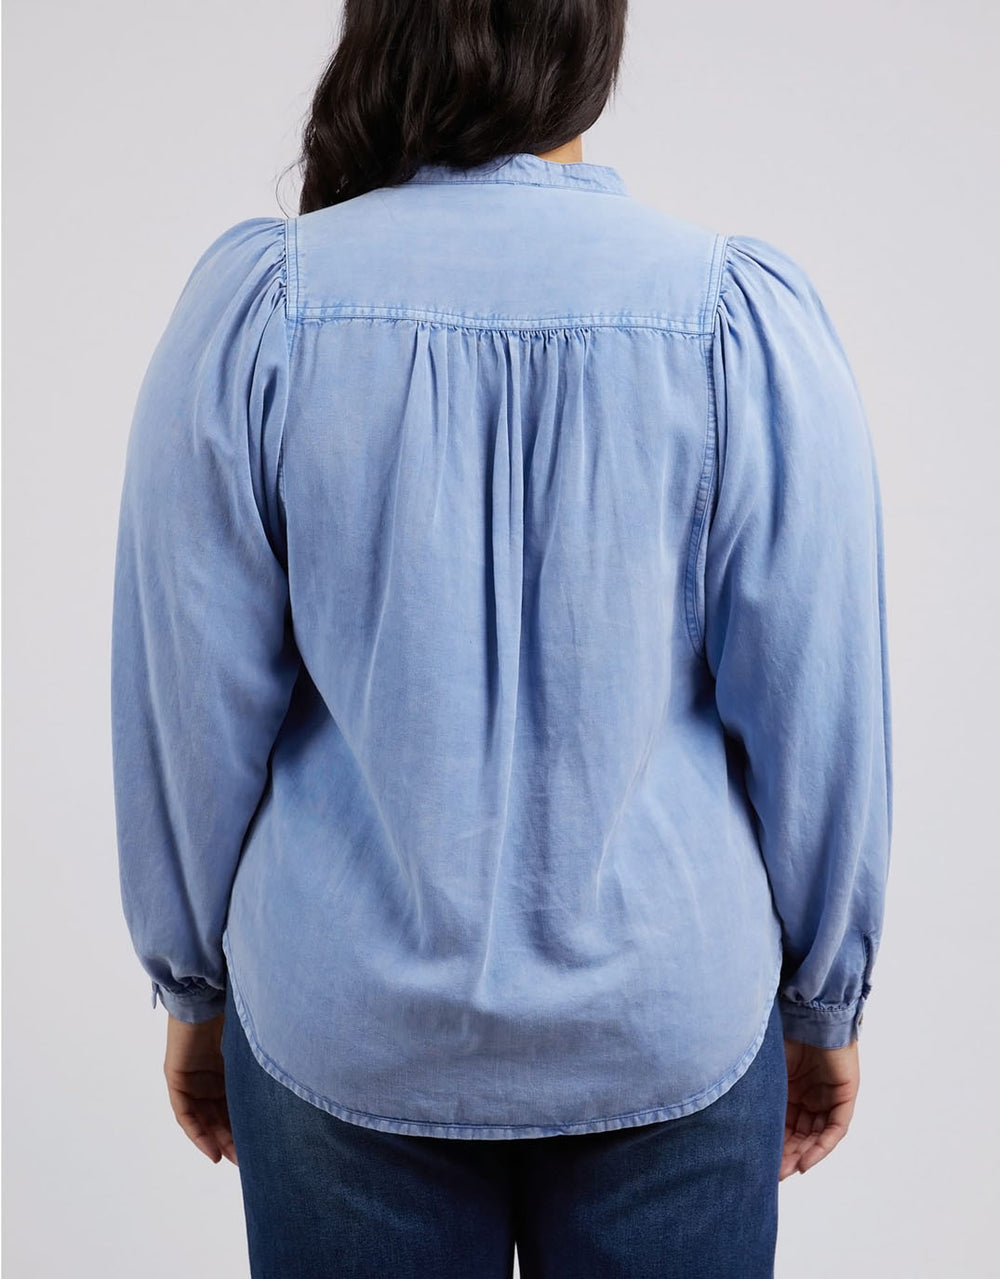 elm-bailey-shirt-cerulean-blue-womens-clothing